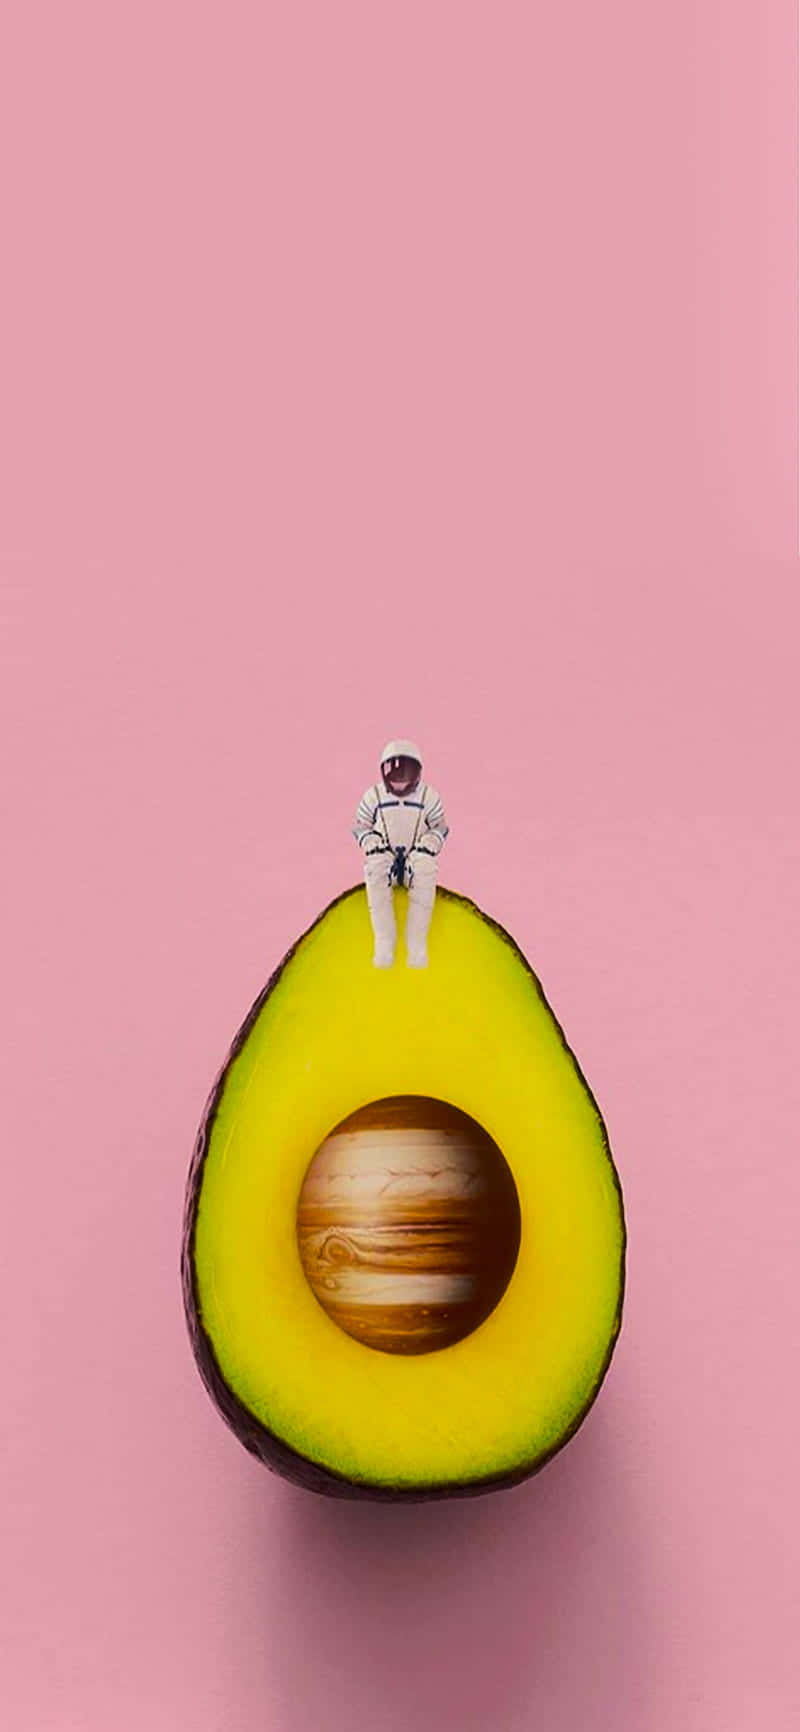 Enjoy using your latest Avocado Iphone Wallpaper